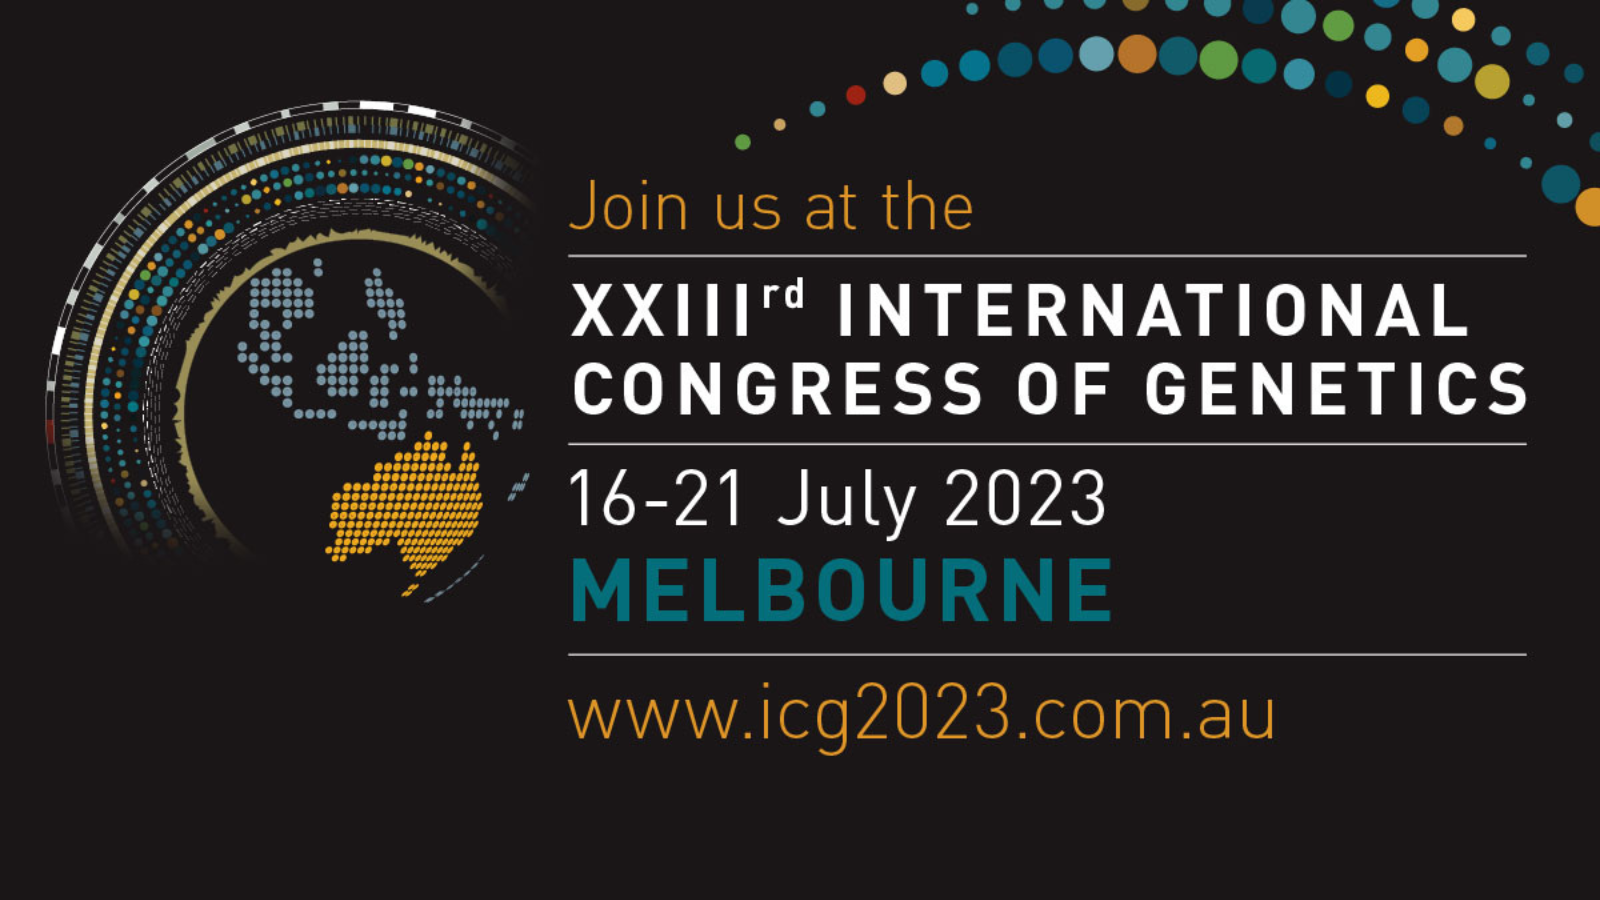 23rd International Congress of Genetics and Genomics - 16-23 July 2023, Melbourne